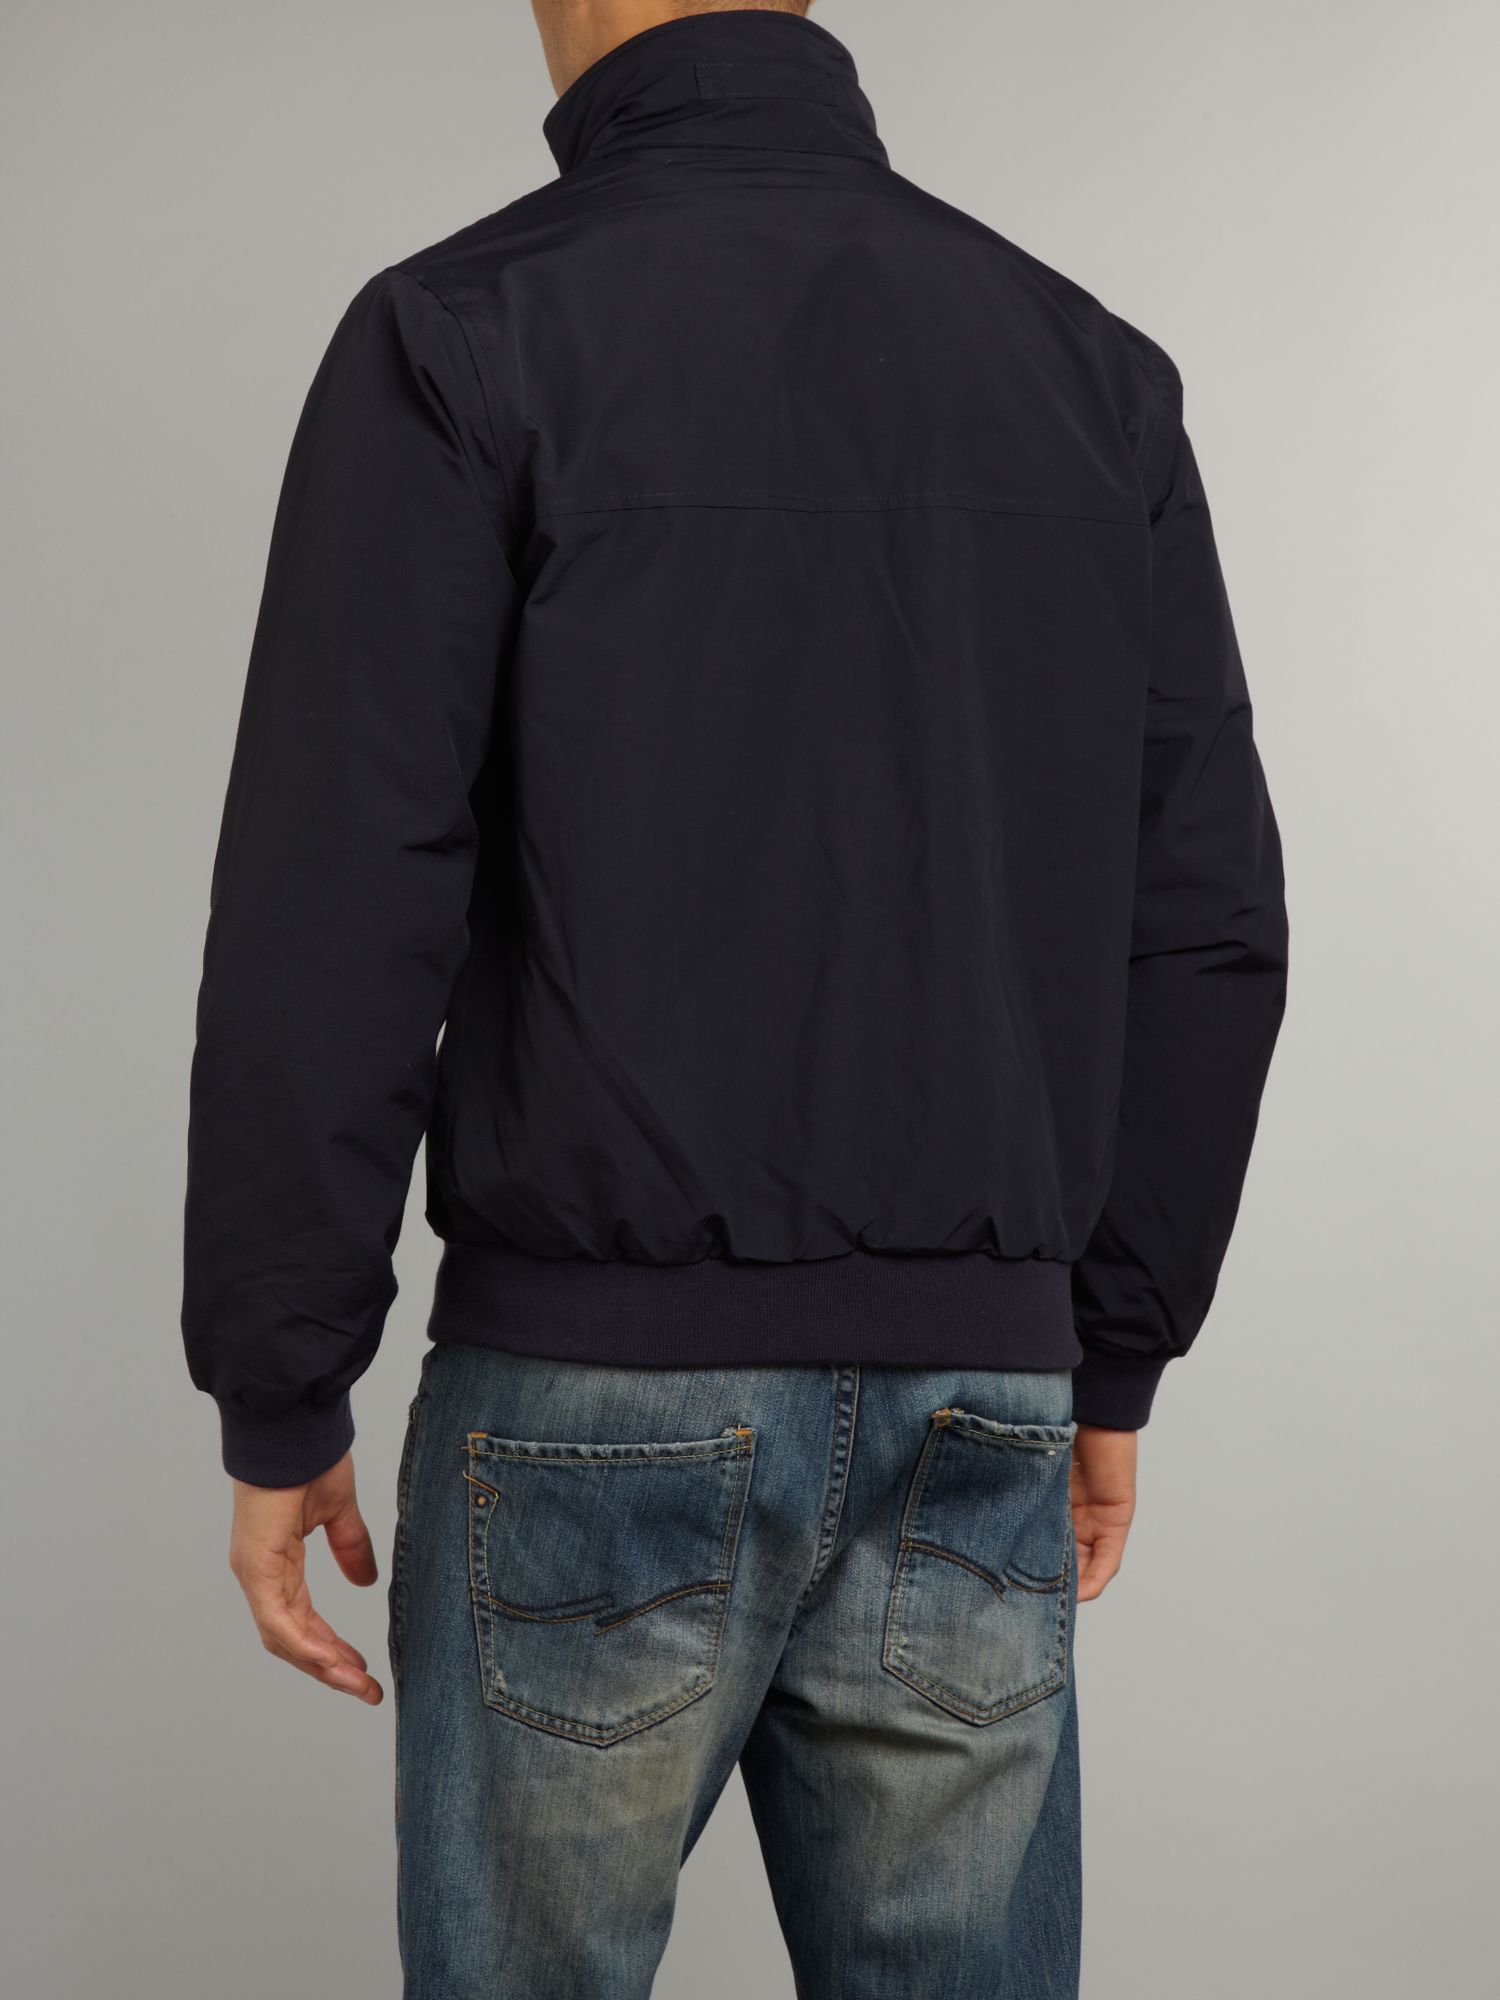 Gant Wayside Jacket In Blue For Men Lyst 